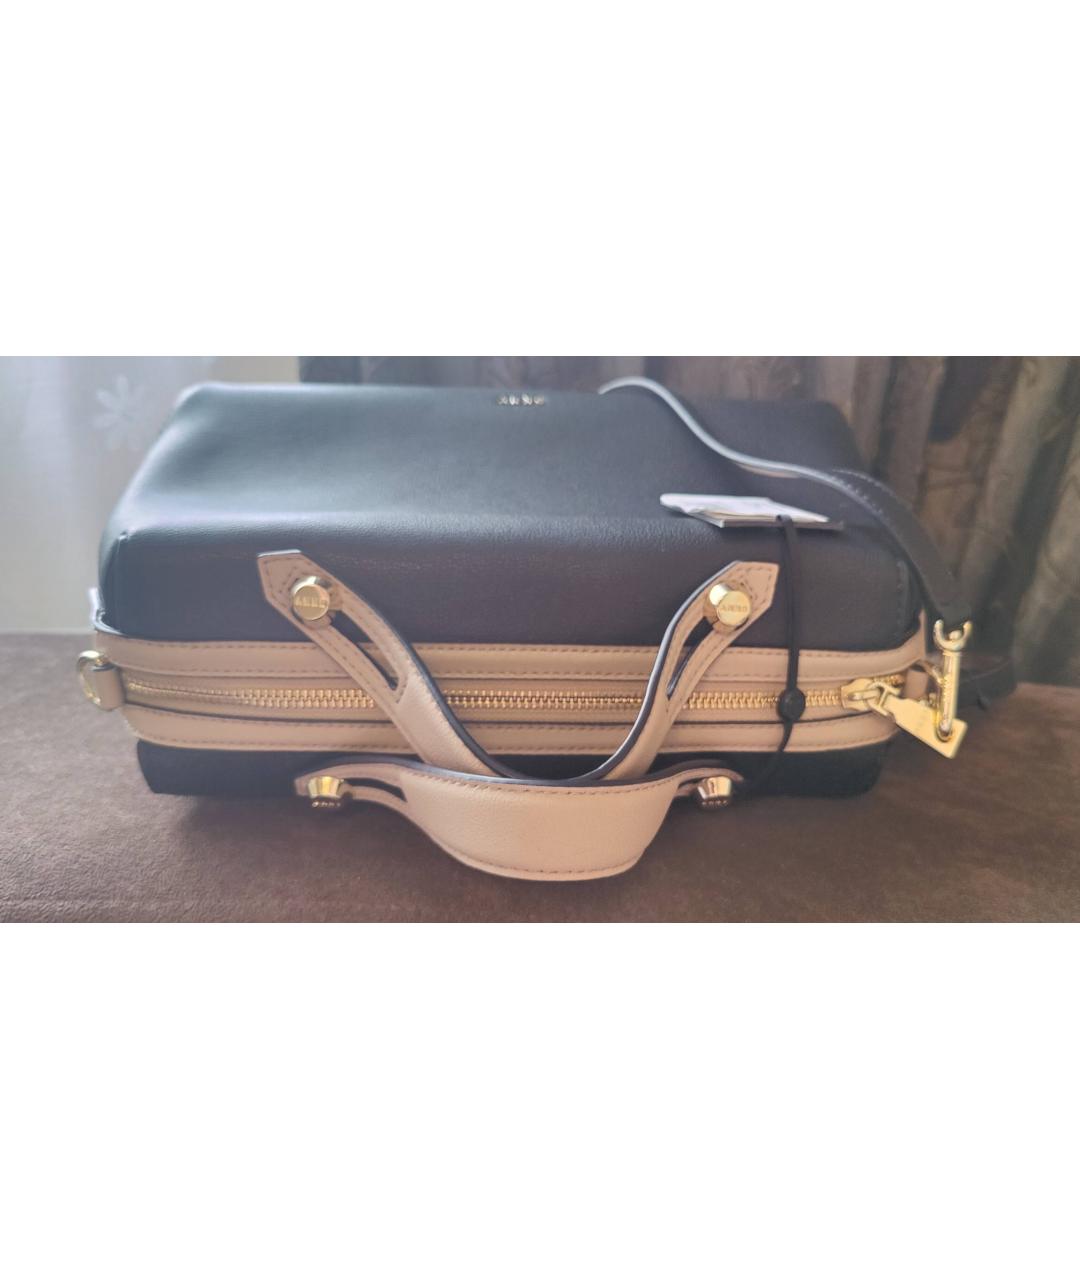 DKNY Мульти кожаная сумка с короткими ручками, фото 4